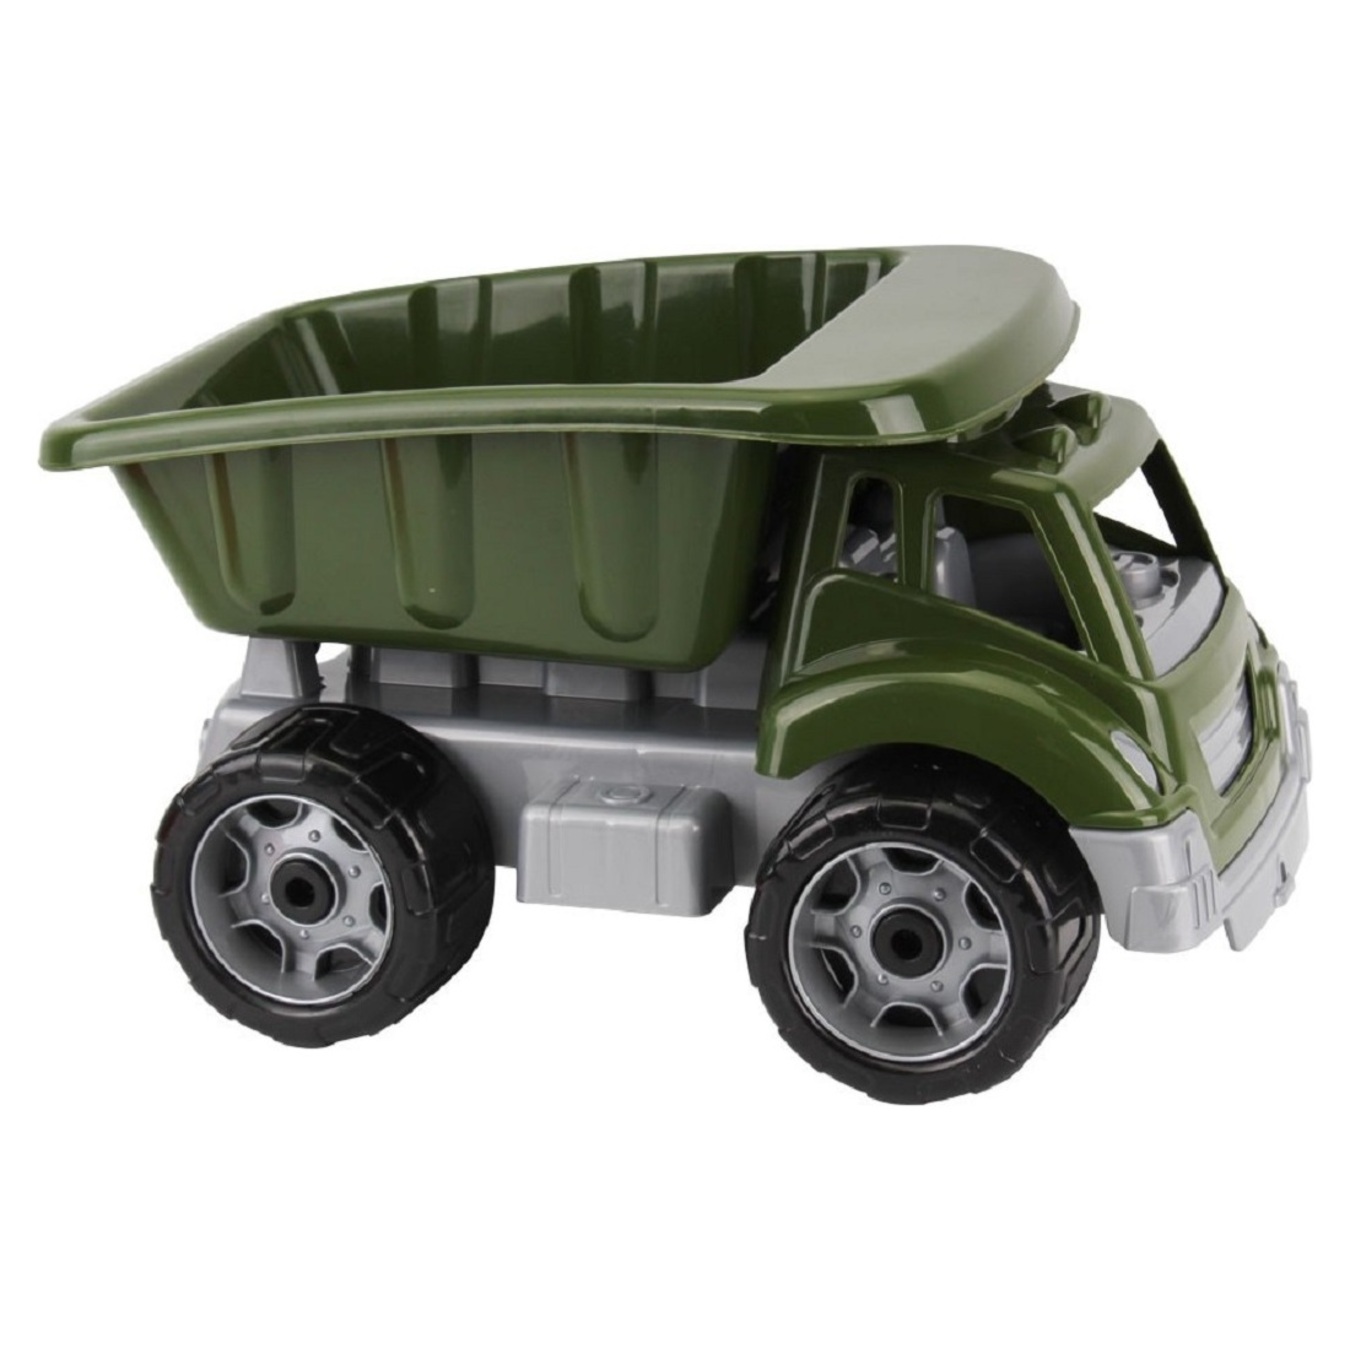 Toy dump truck TechnoK 5484